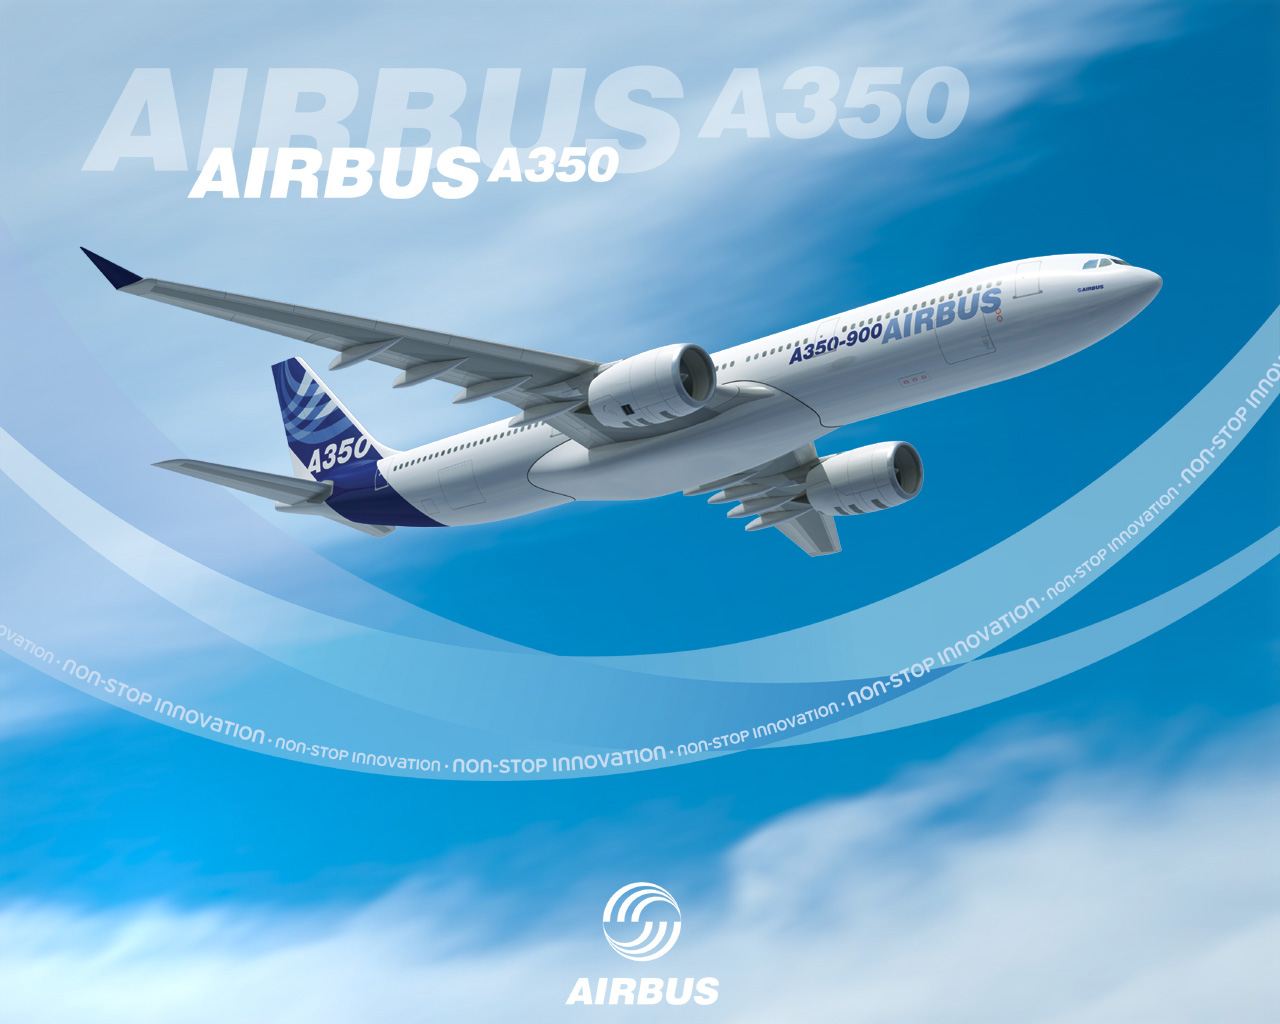 Airbus A350 News